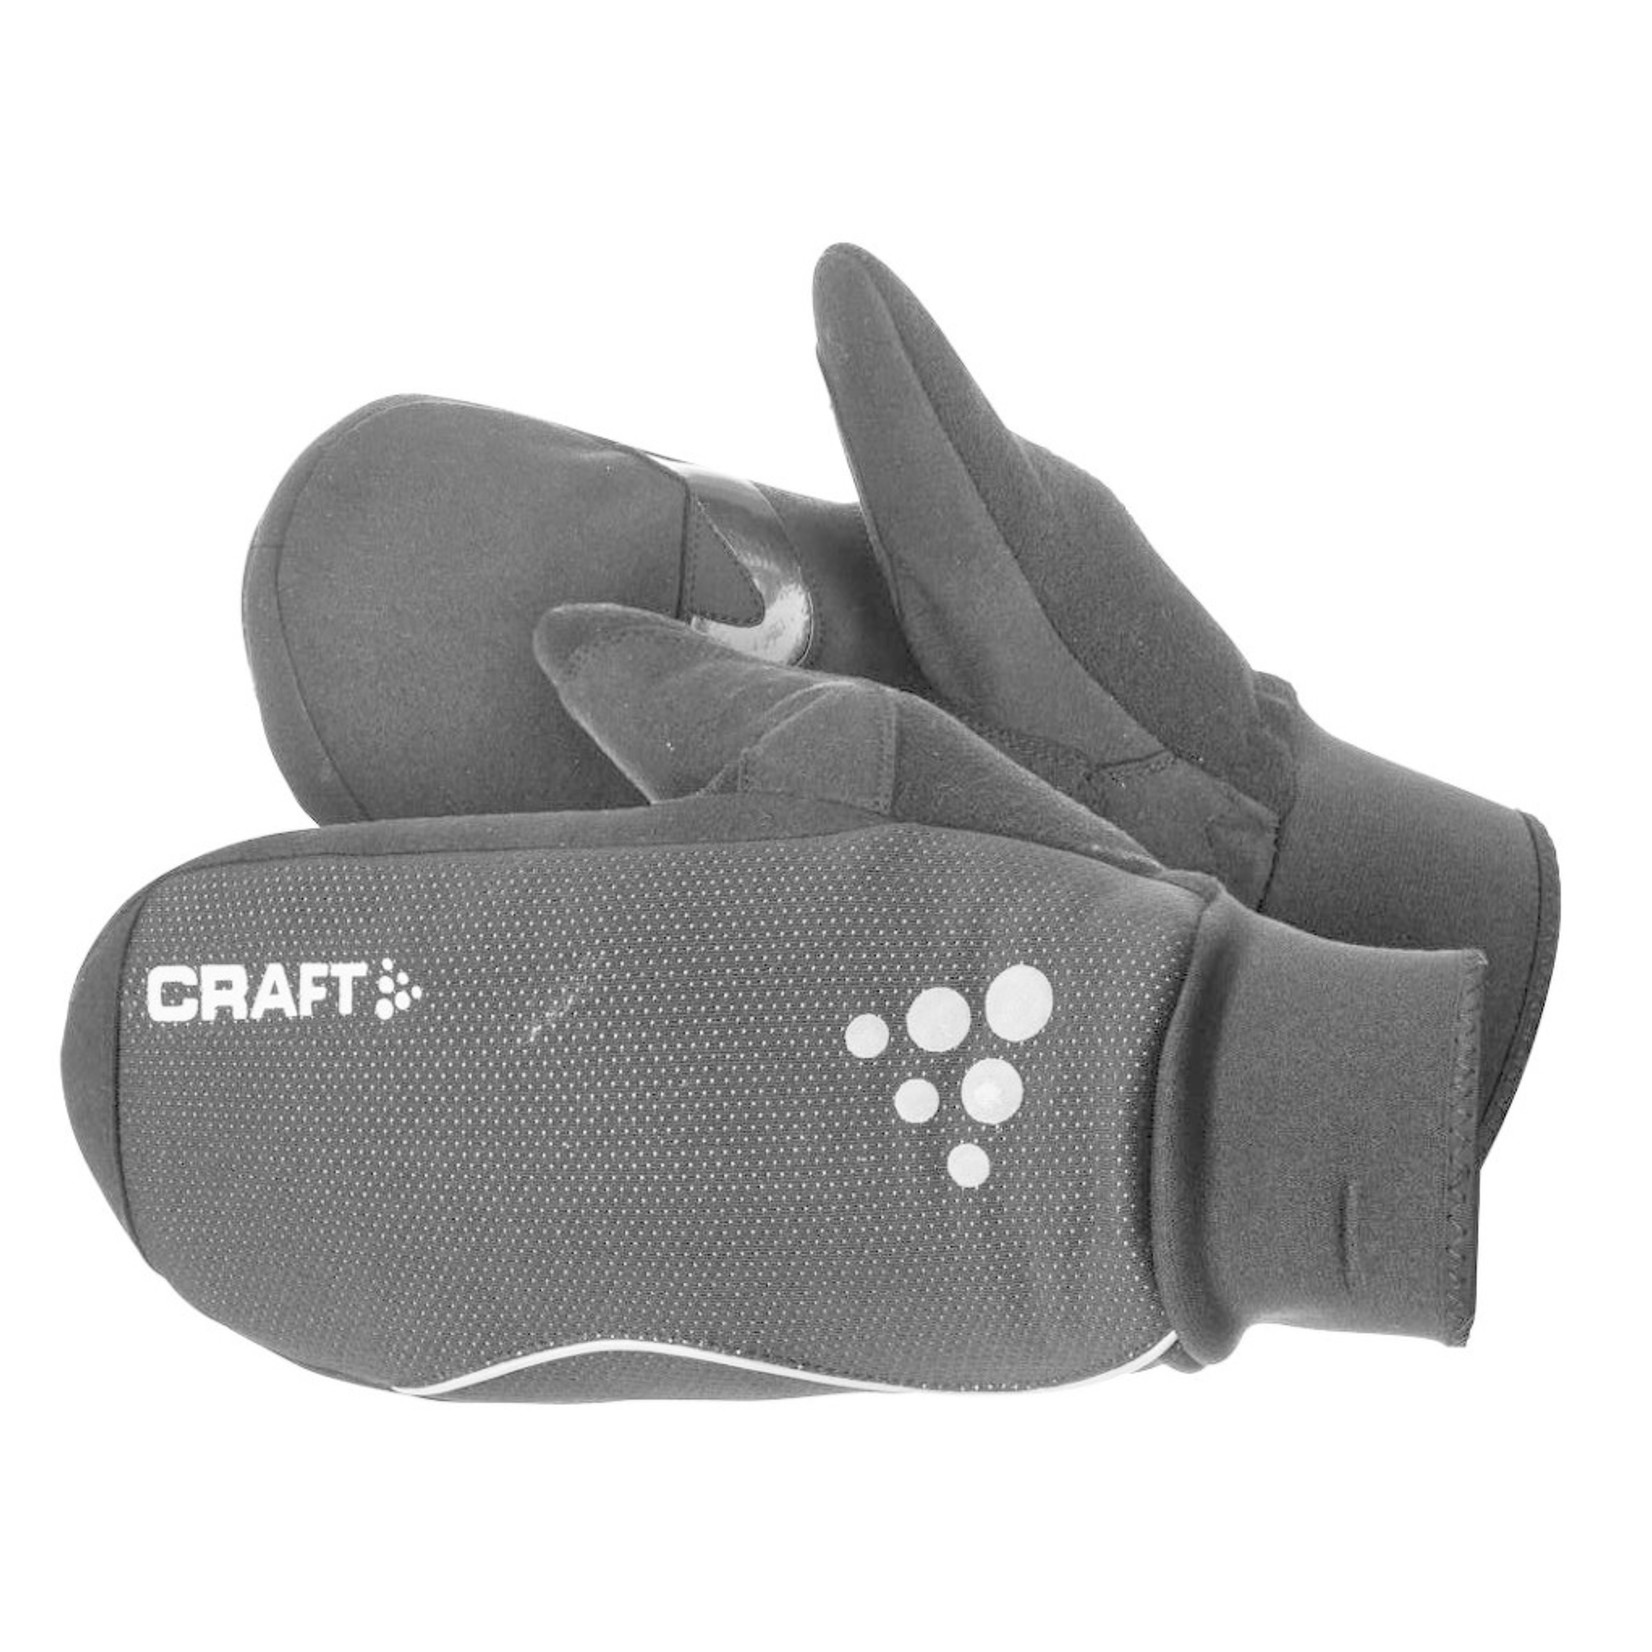 CRAFT SPORTS Craft Touring Mitten, X-Small, Black